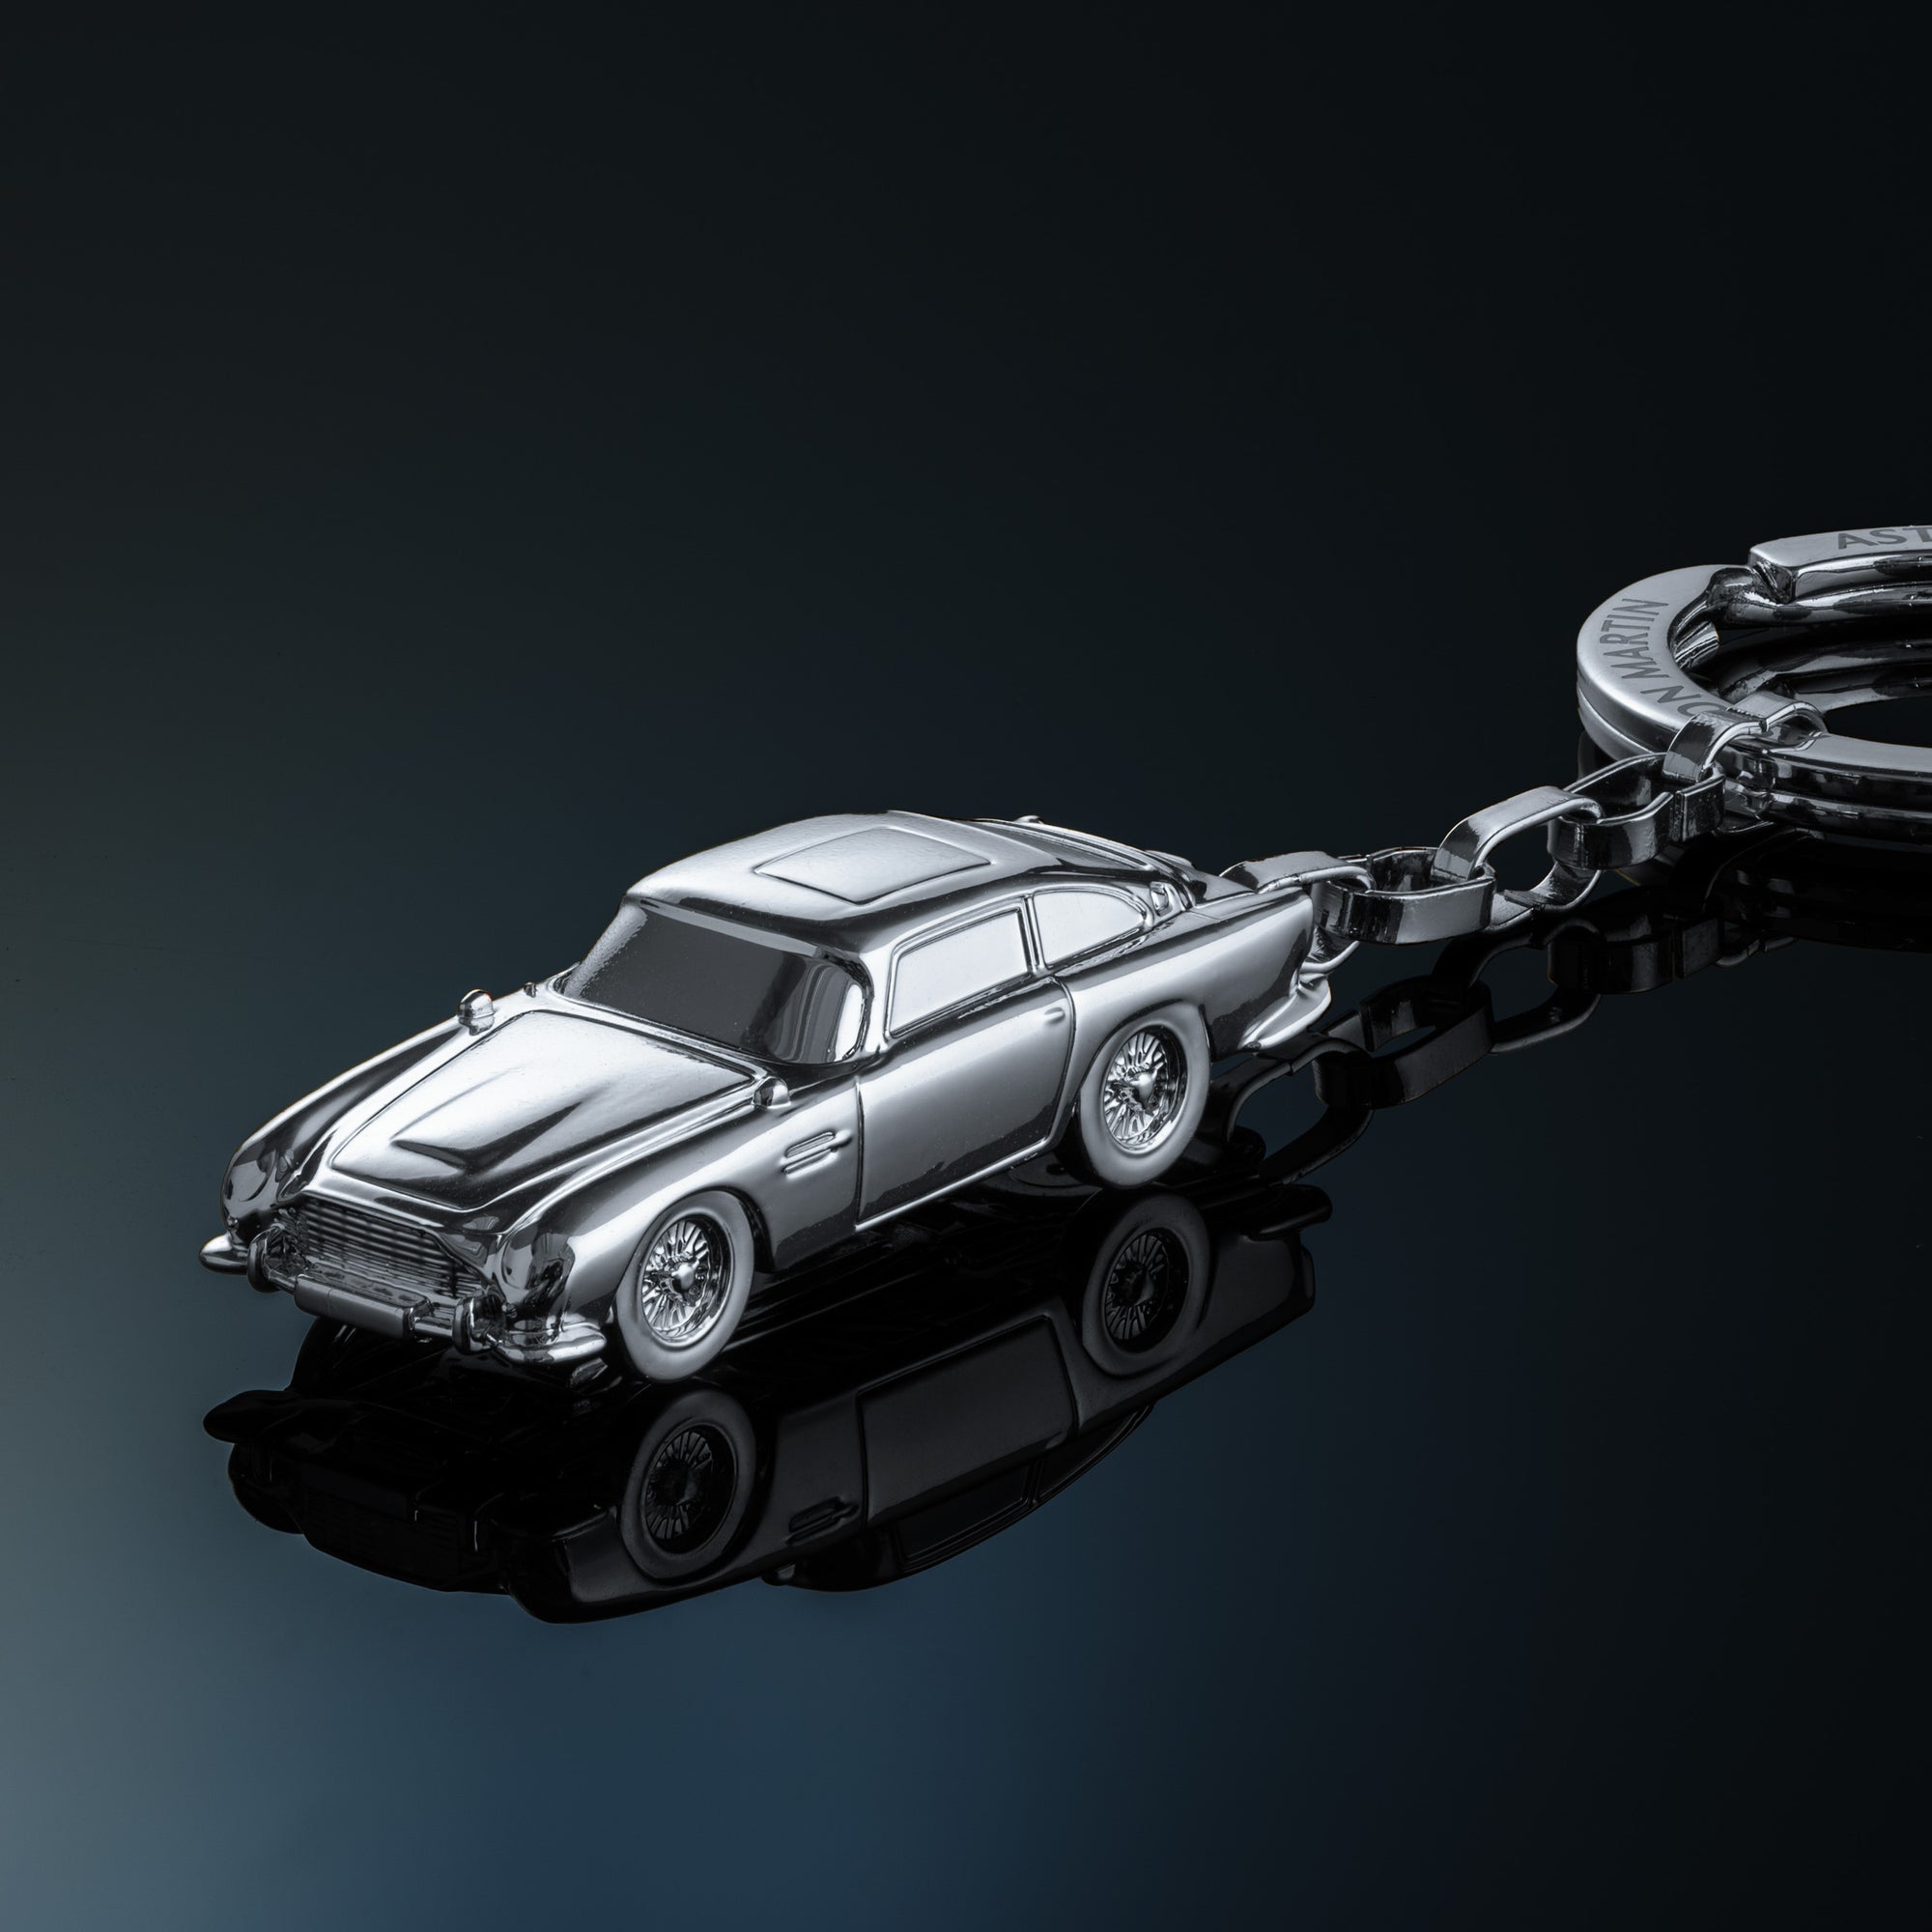 James Bond Aston Martin DB5 Car Keyring - Chrome Edition